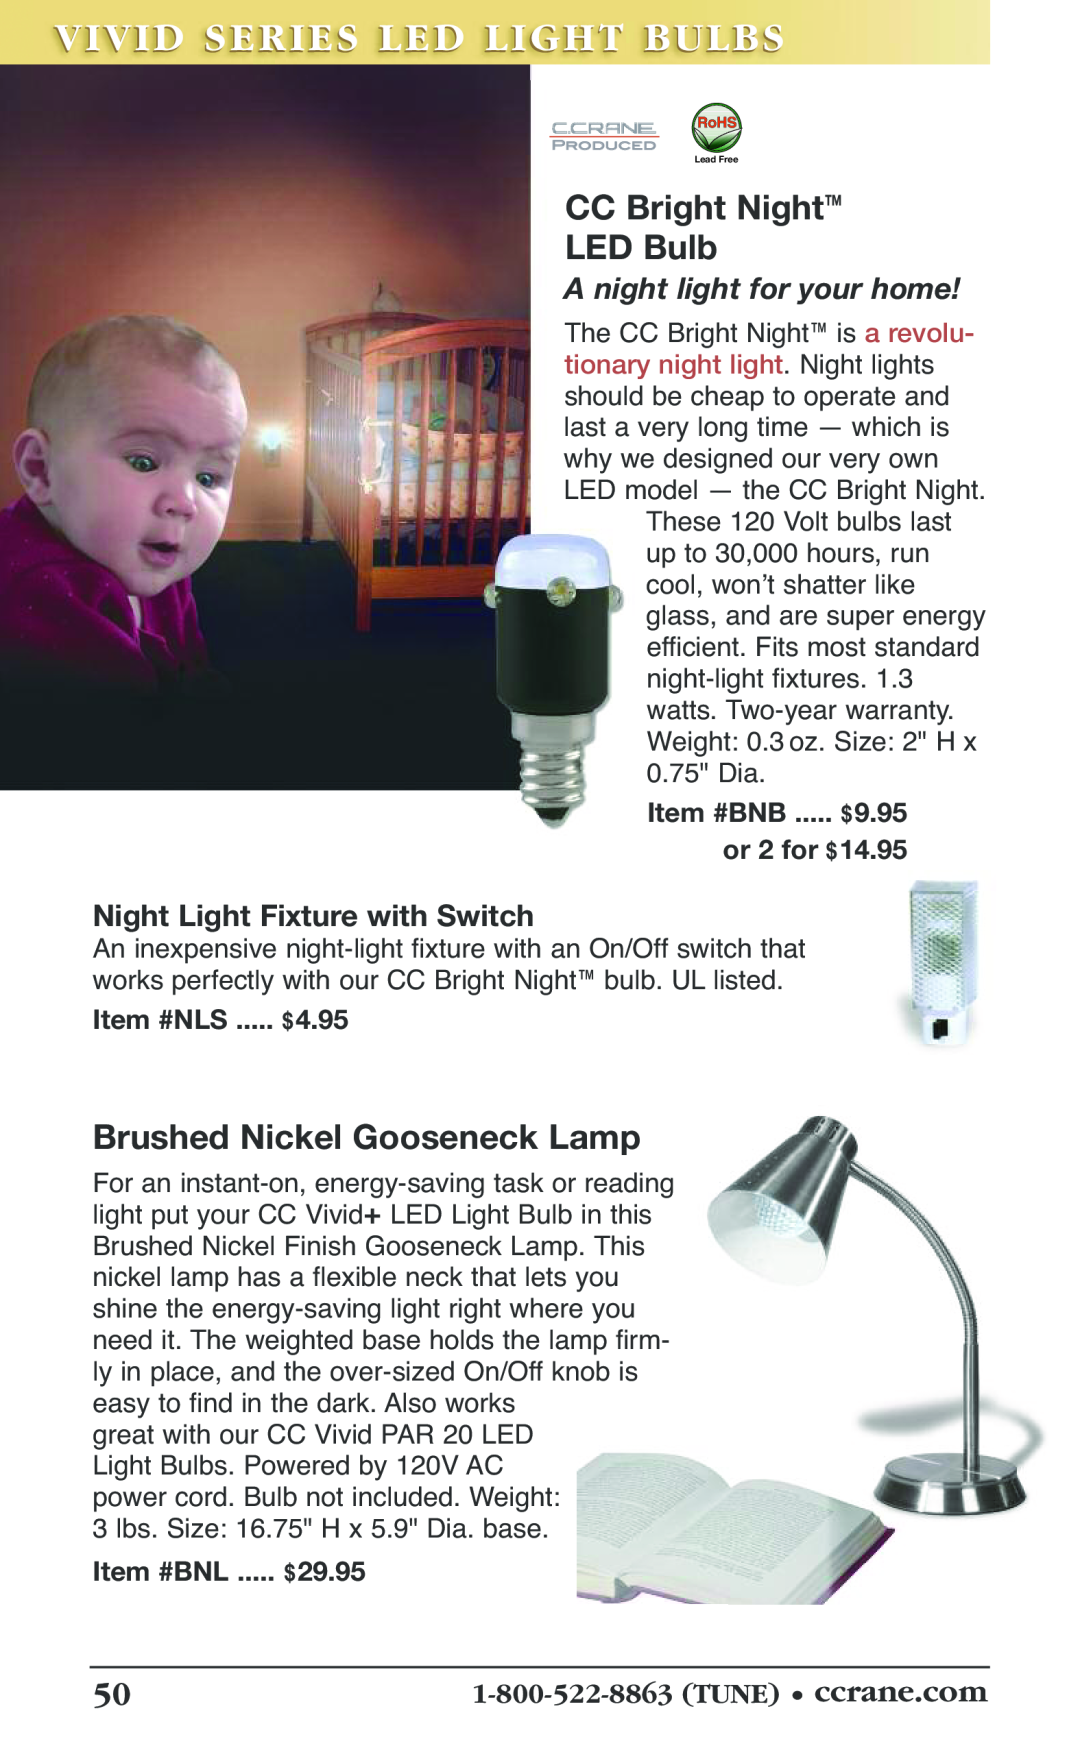 C. Crane 19f CC Bright Night LED Bulb, Brushed Nickel Gooseneck Lamp, A night light for your home, Item #NLS ..... $4.95 